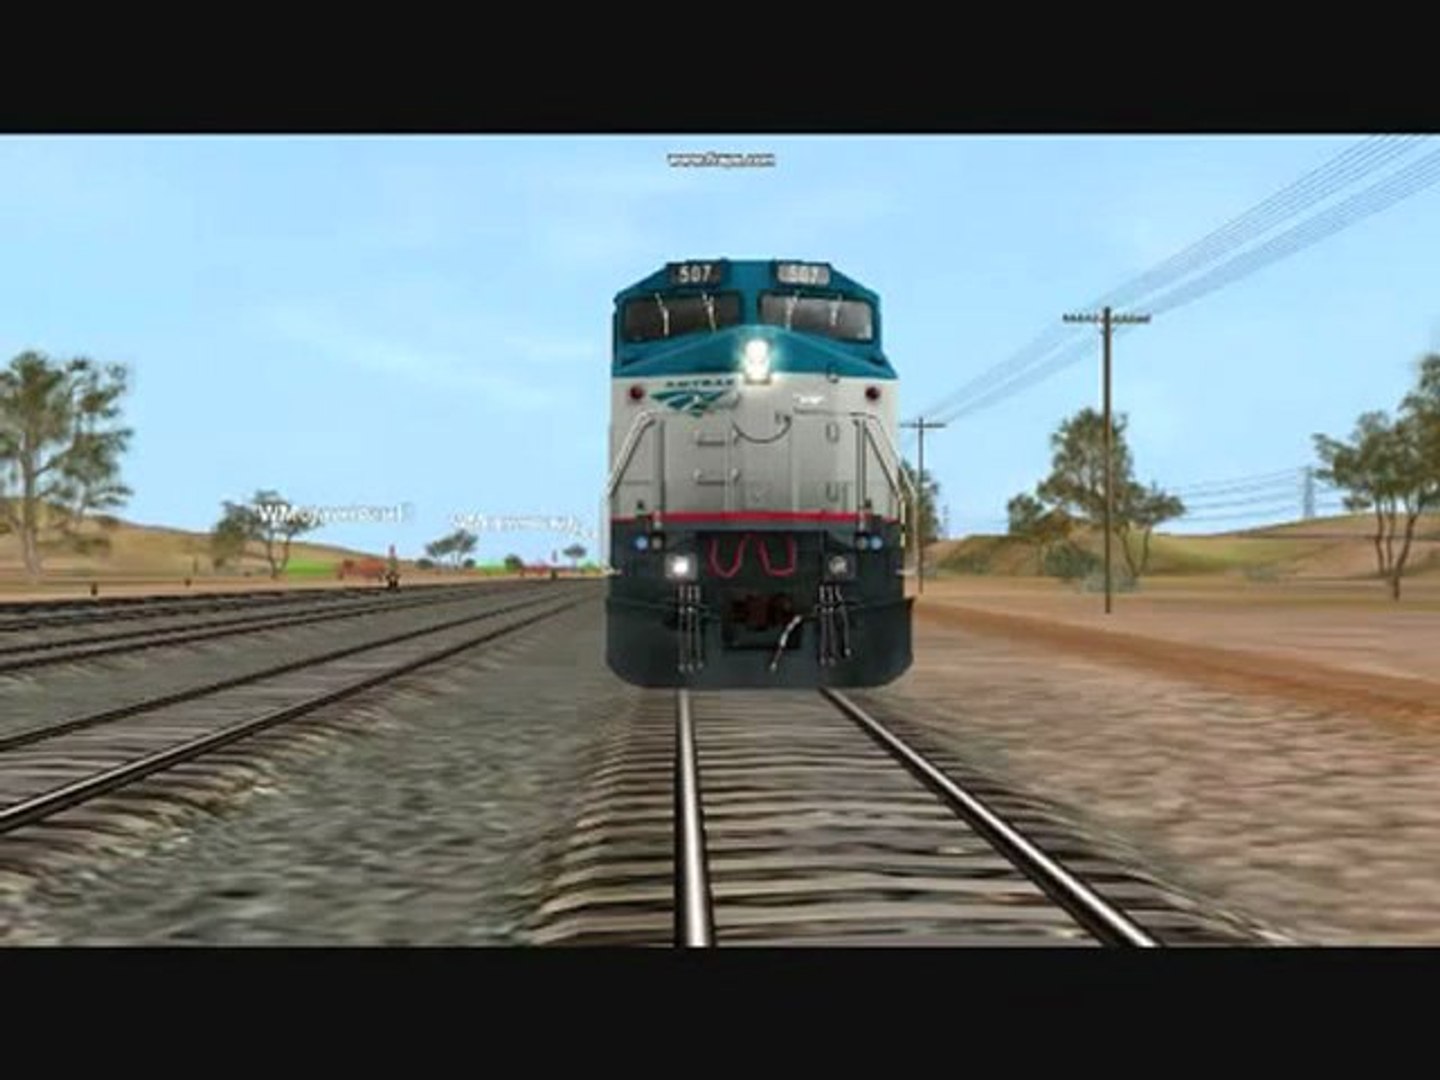 Trainz Railroad Simulator 2006 Pc Game Full Version Free